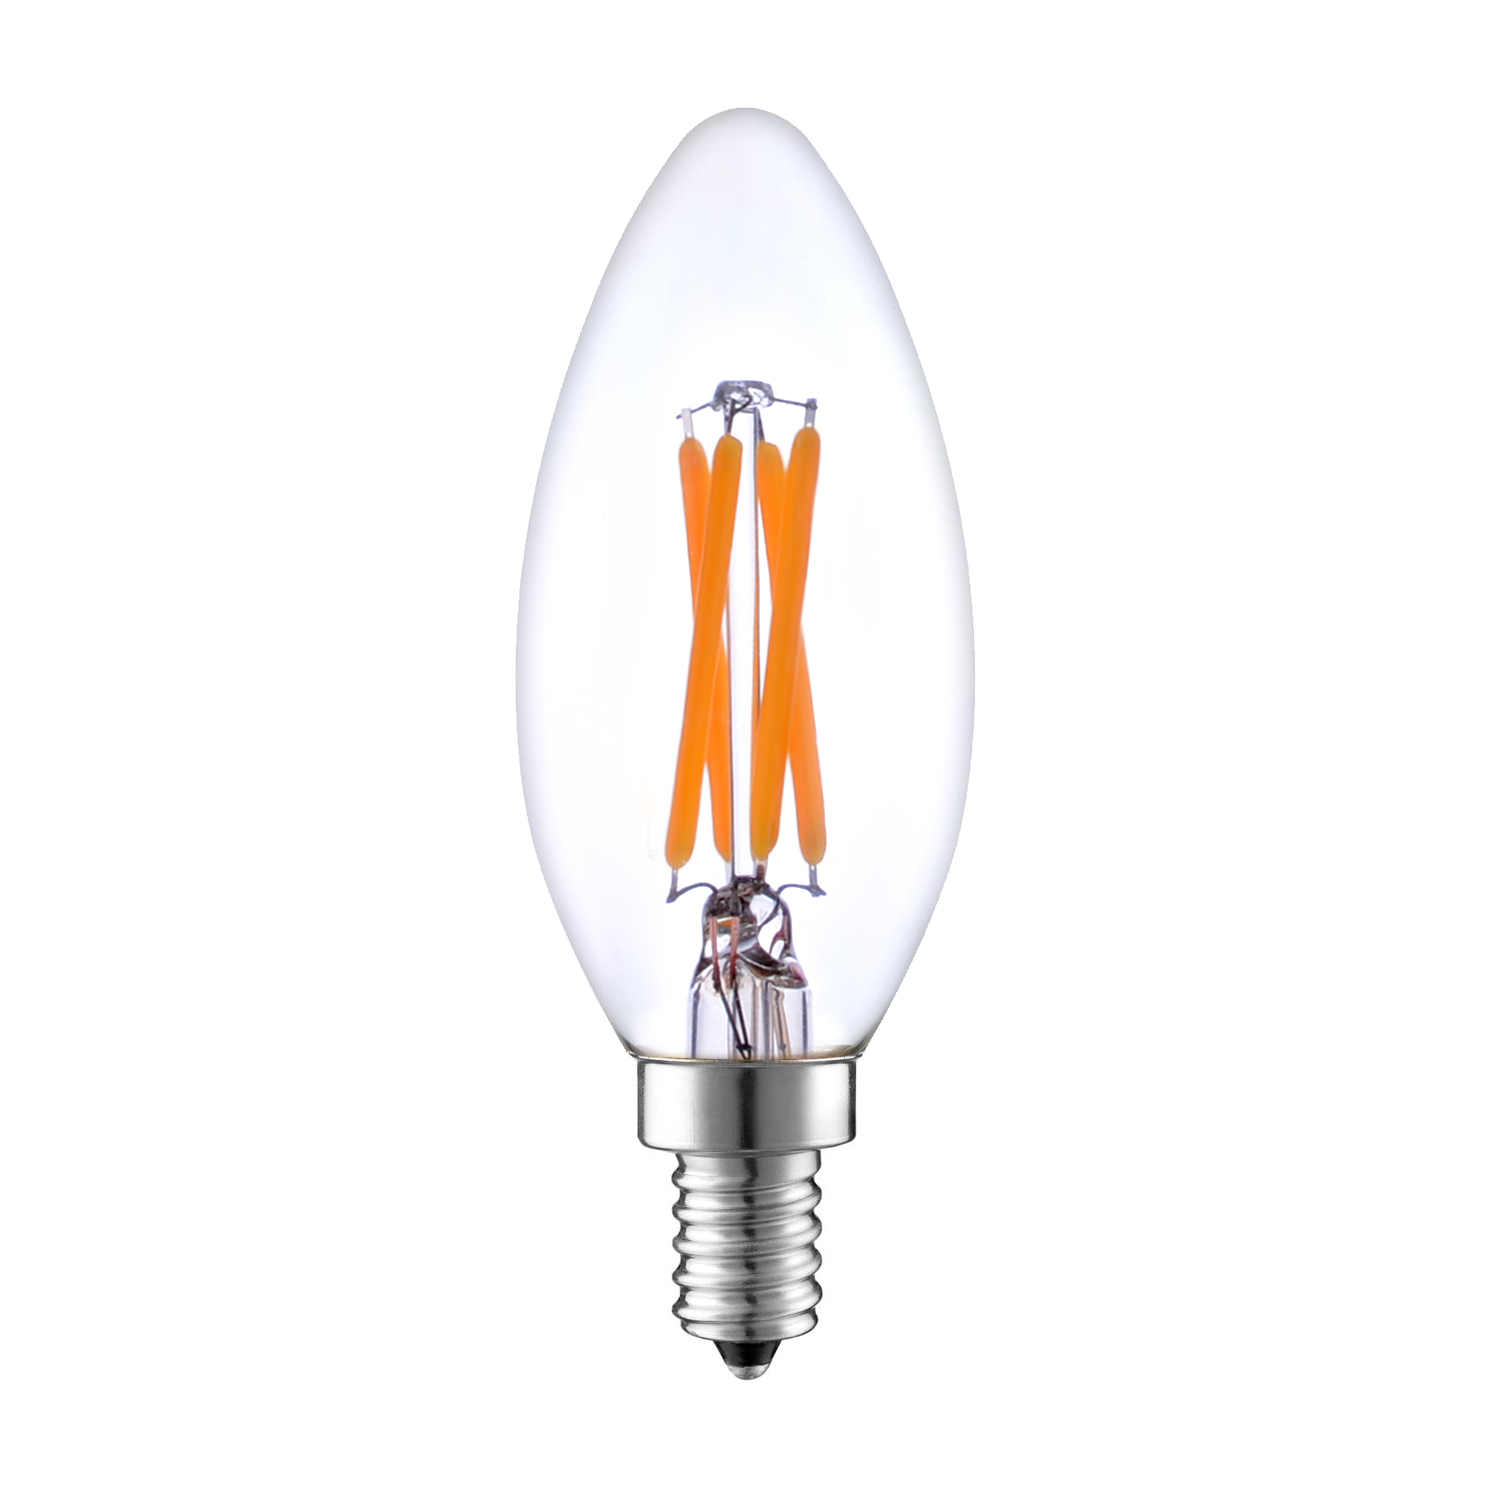 E12 LED filament candelabra bulbs